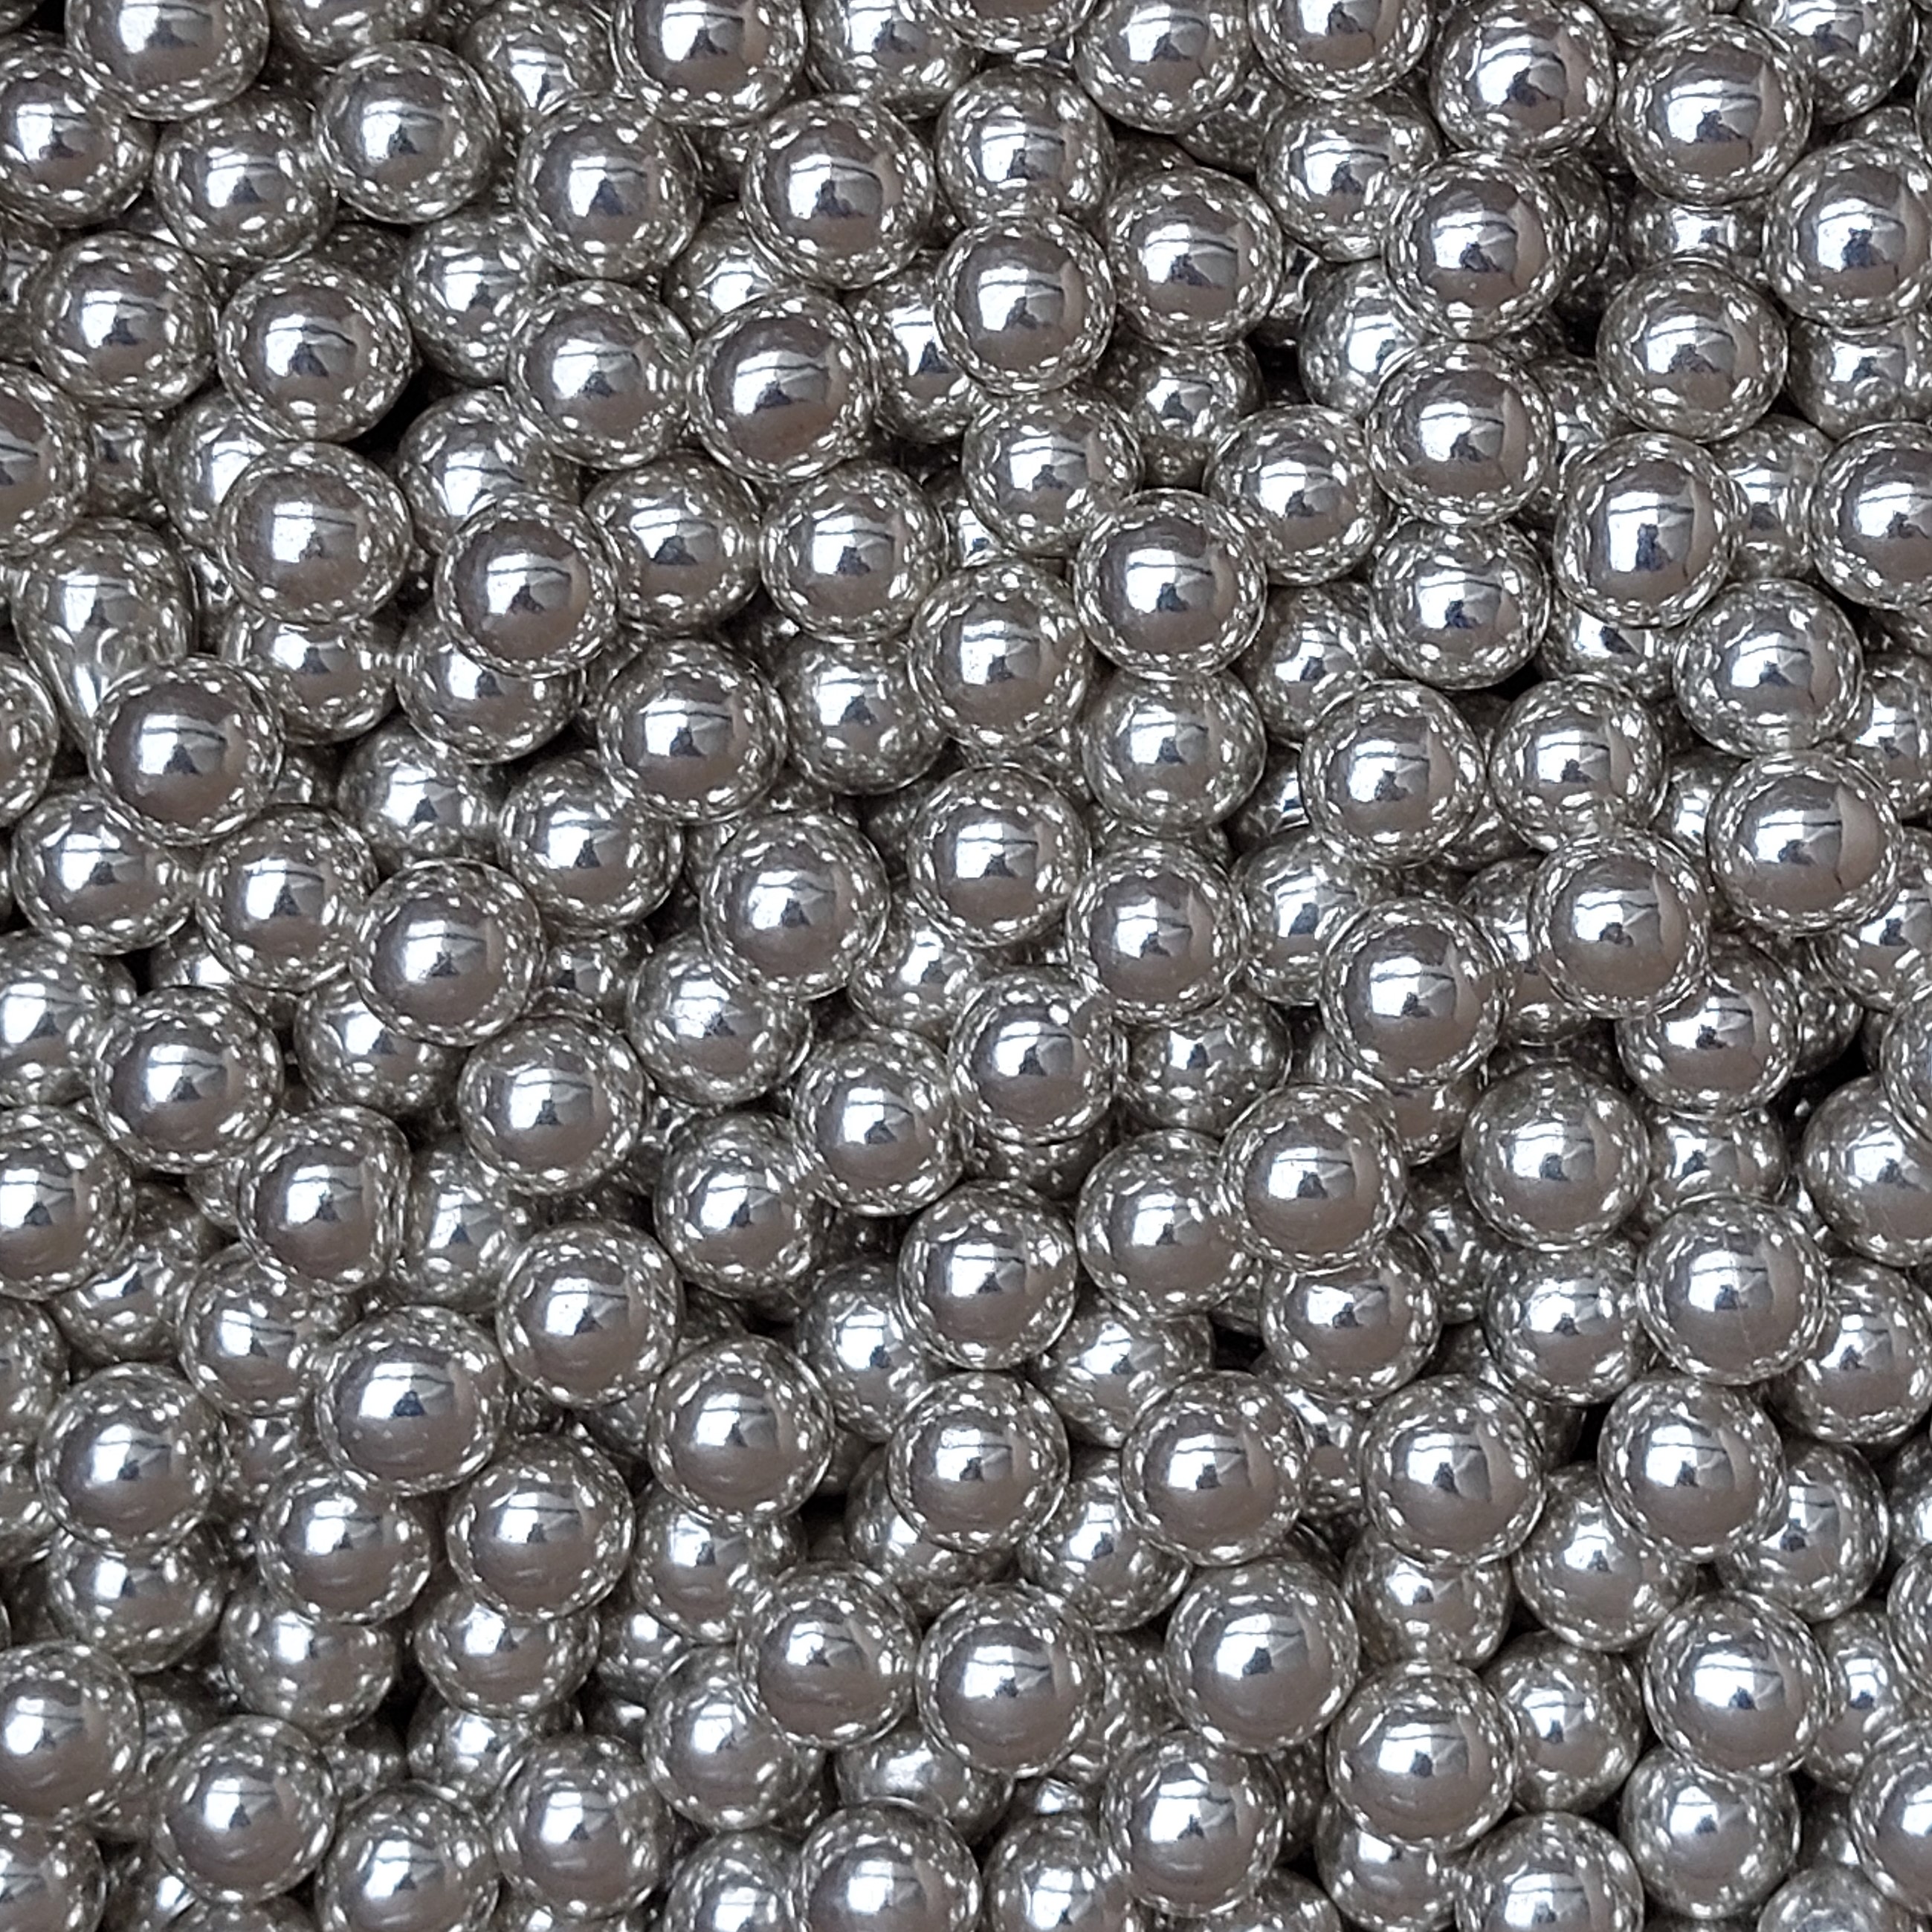 Chocolate balls silver 125g